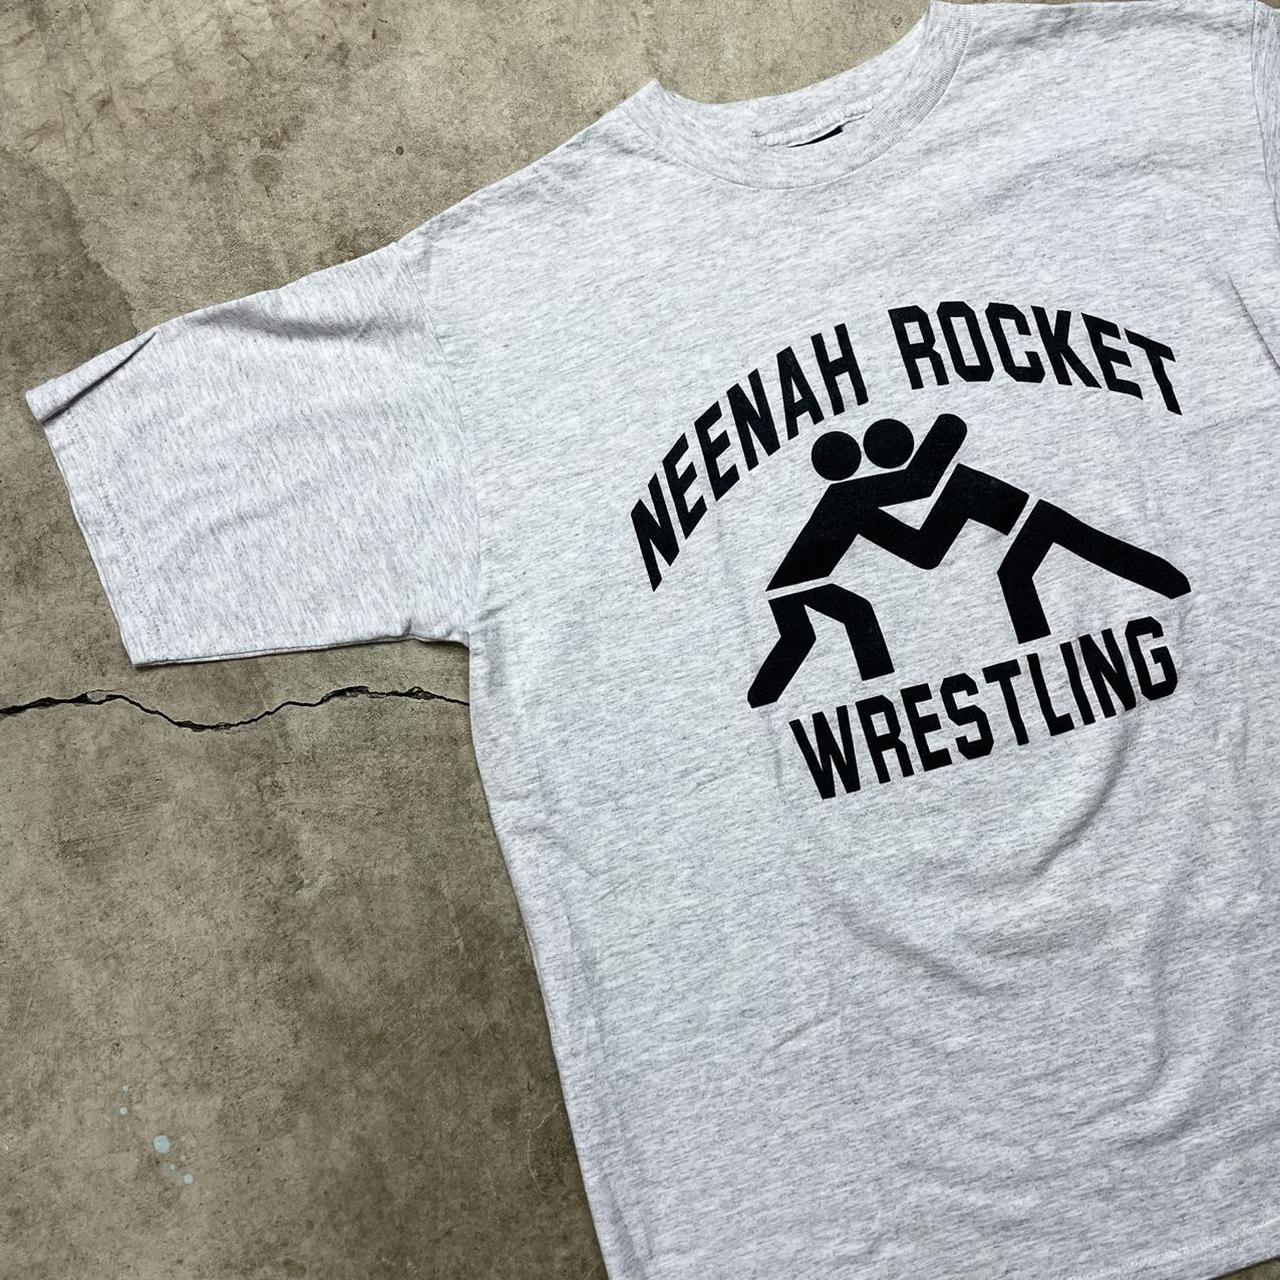 Product Image 2 - Vintage Neenah Rockets Wrestling T-shirt